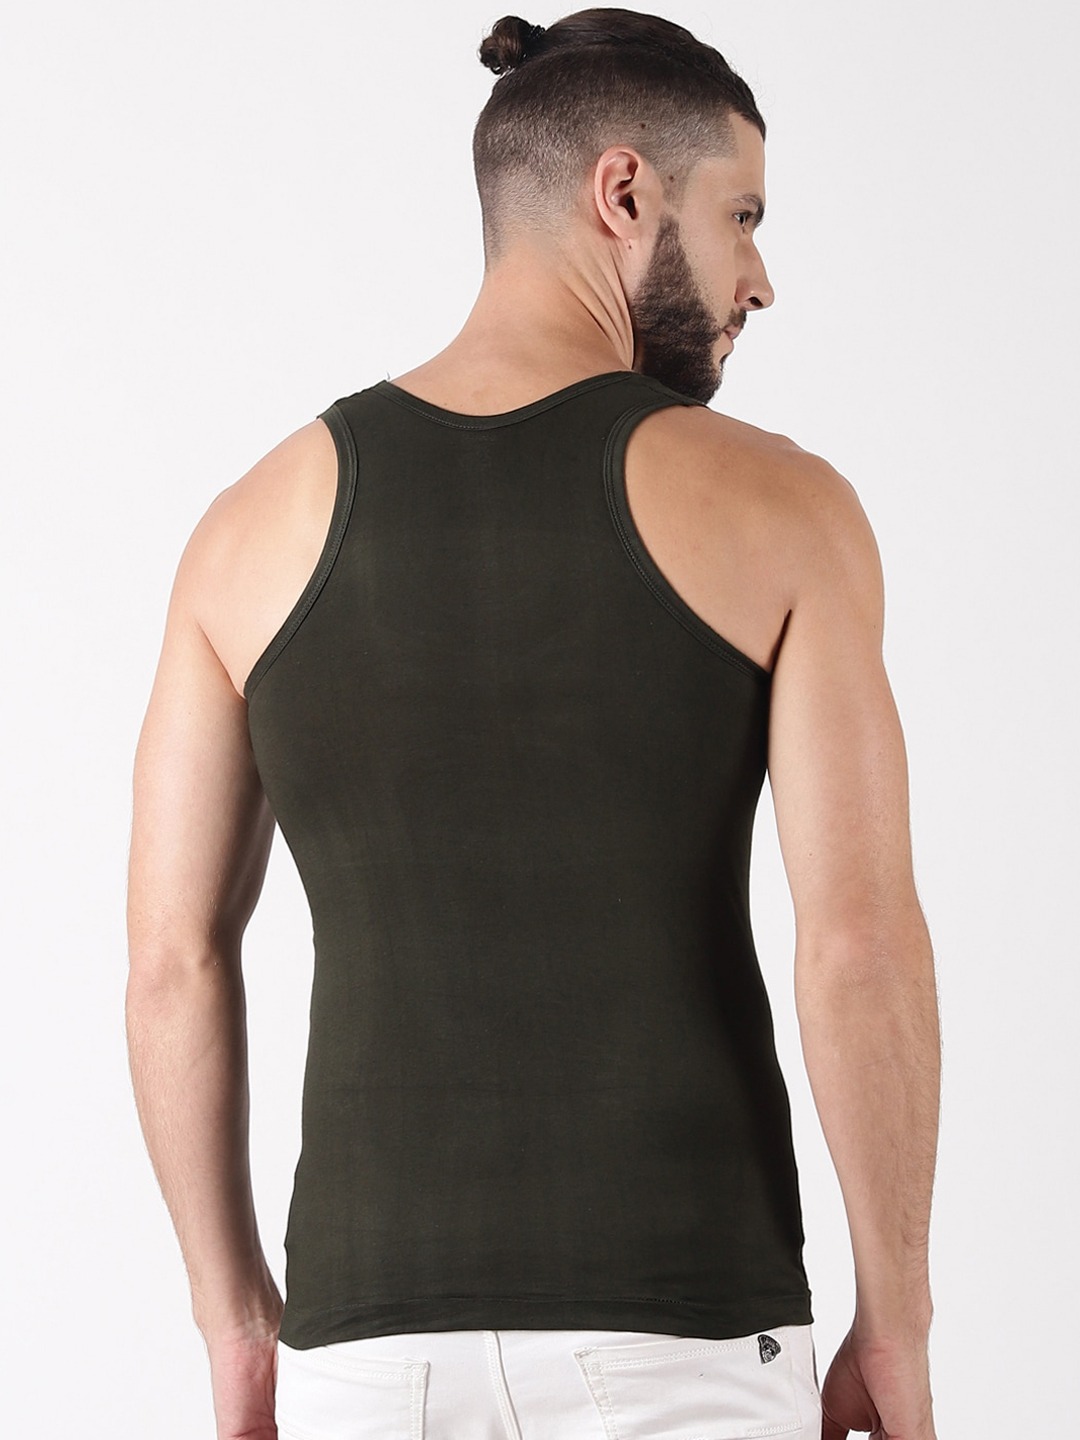 Clothing Innerwear Vests | Dollar Lehar Men Pack Of 5 Assorted Innerwear Vest MLHVE-01-PO5-ASST - OQ98182